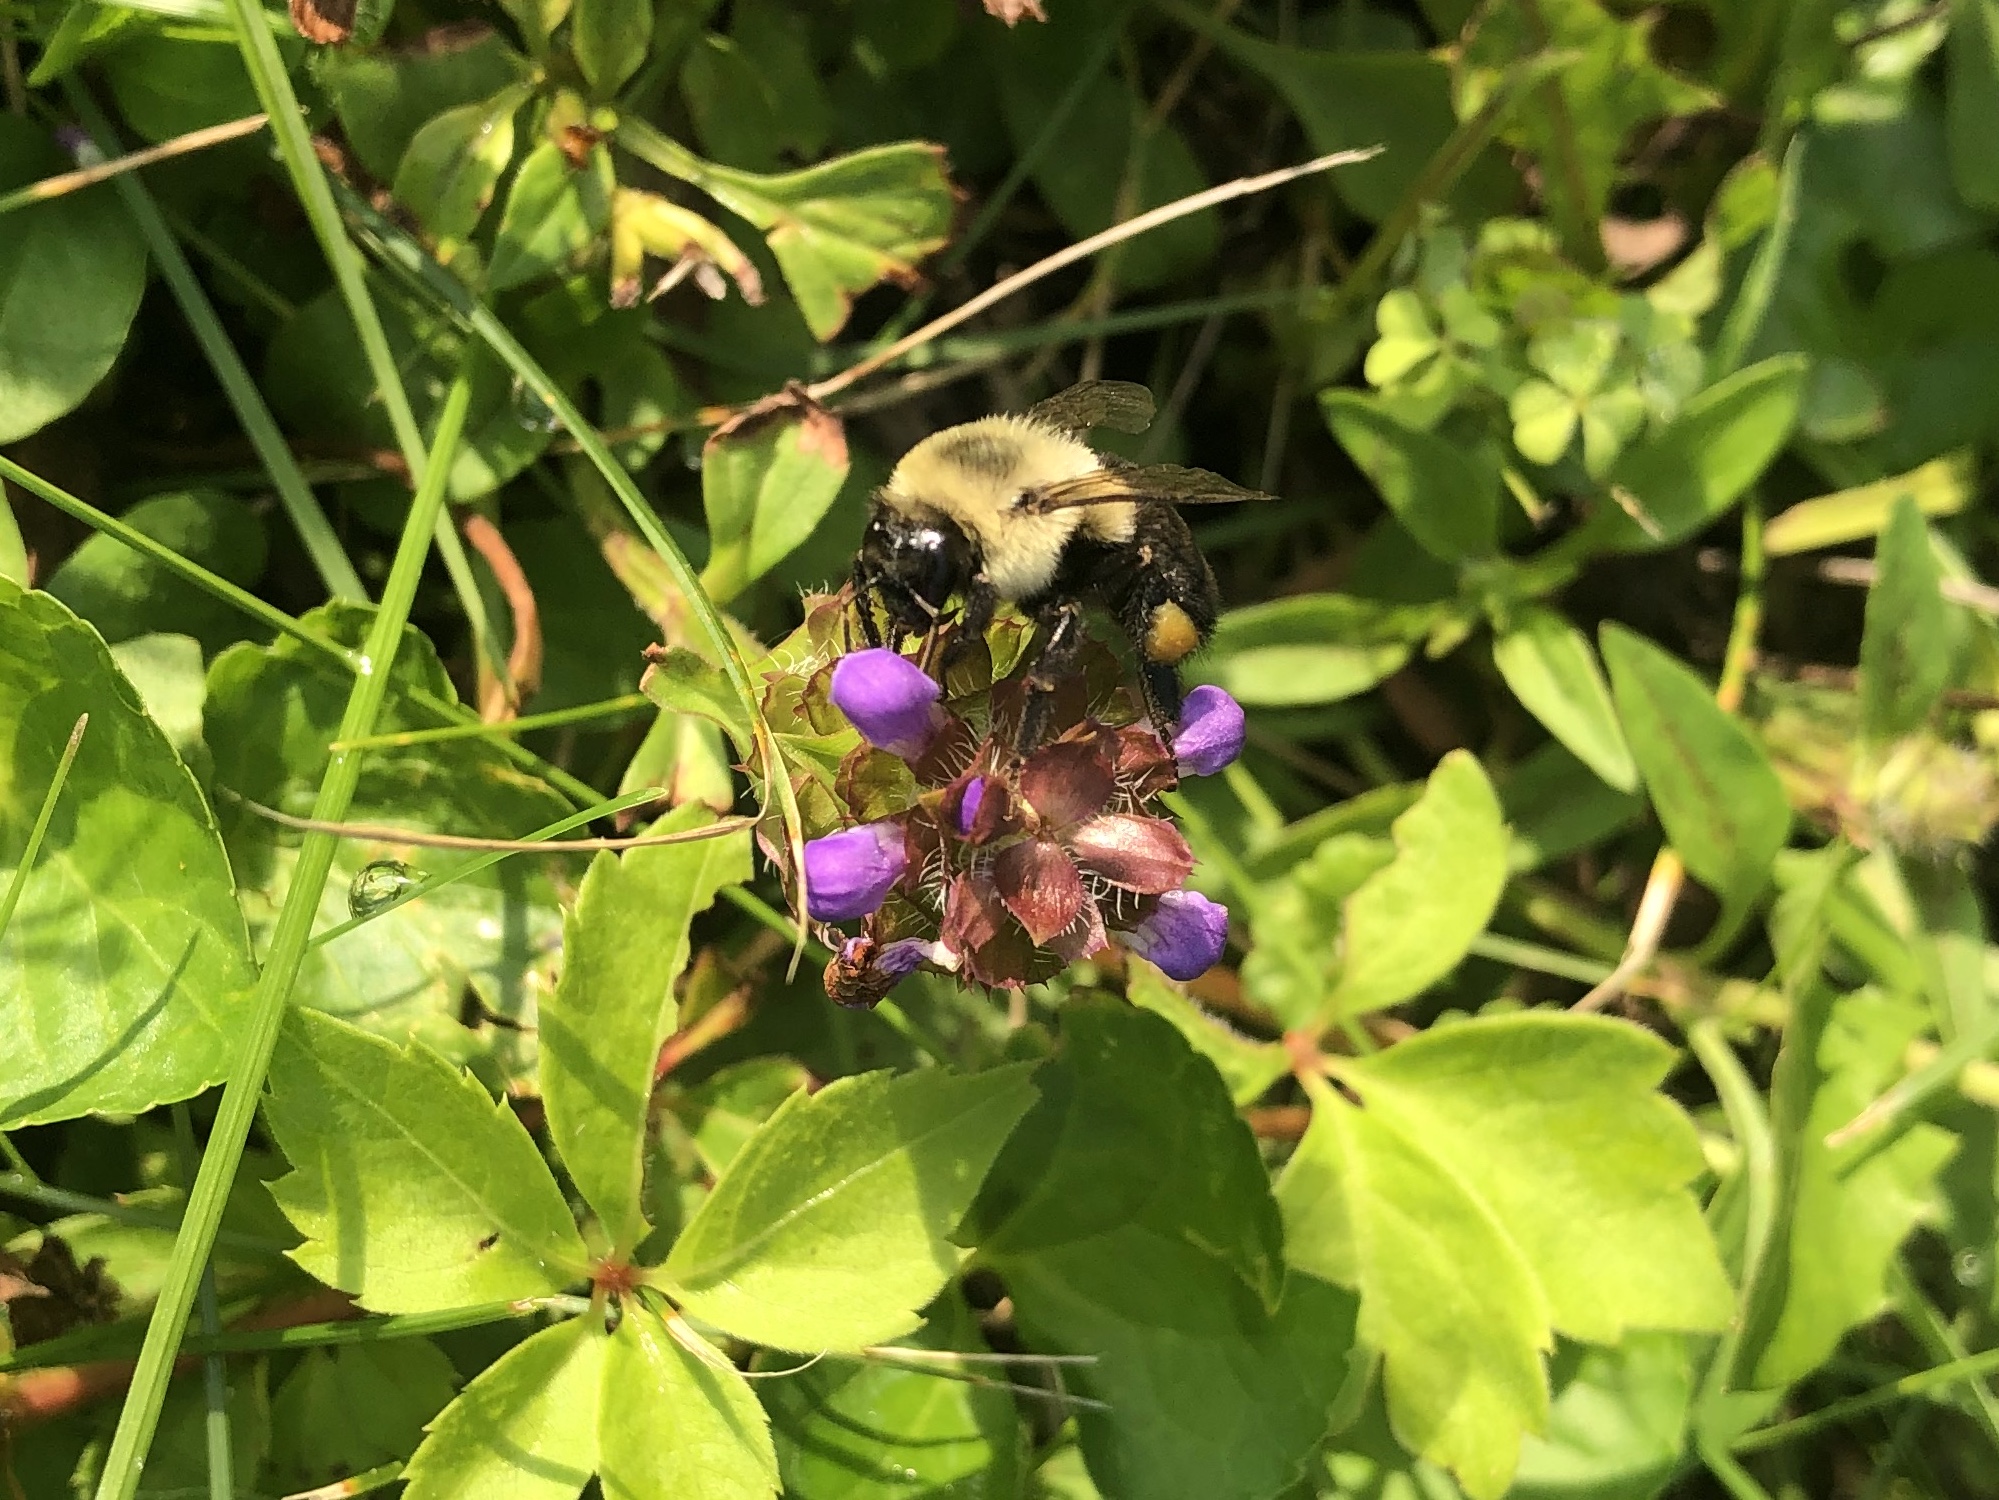 Bumblebee on Heal-All near Marion Dunn Pond on August 13, 2021.